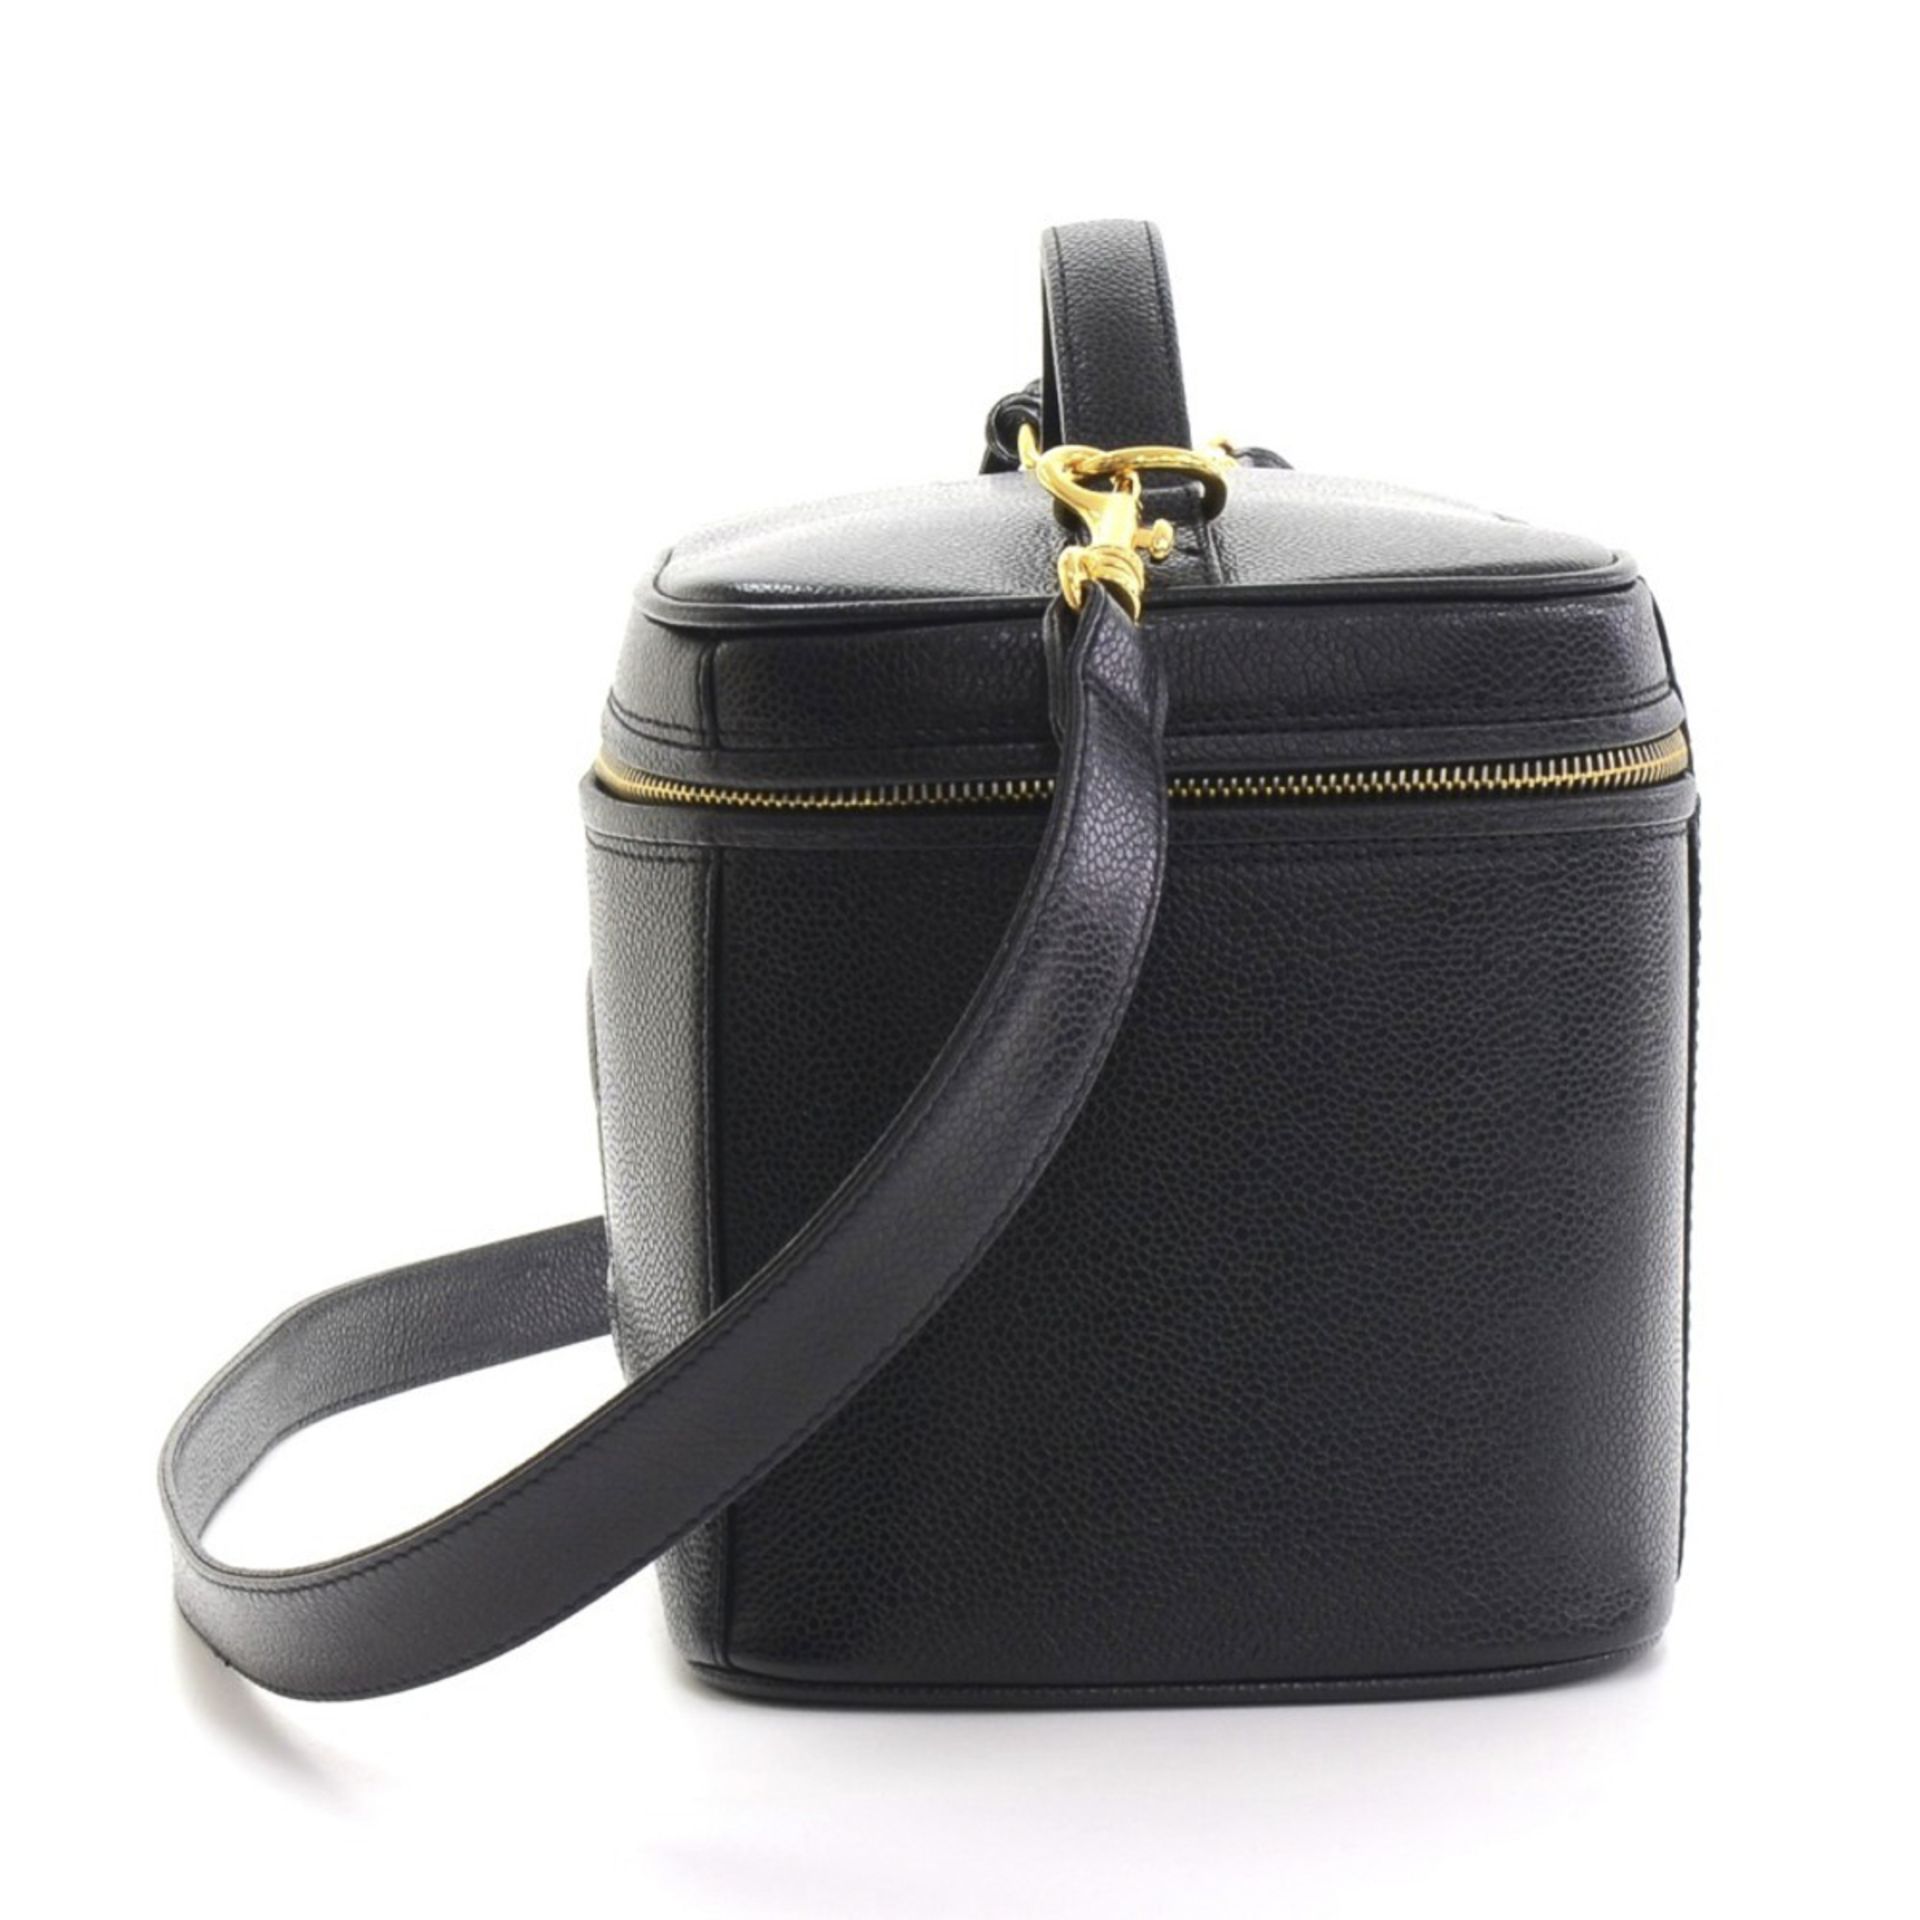 Chanel, Timeless Vanity Handbag - Image 2 of 14